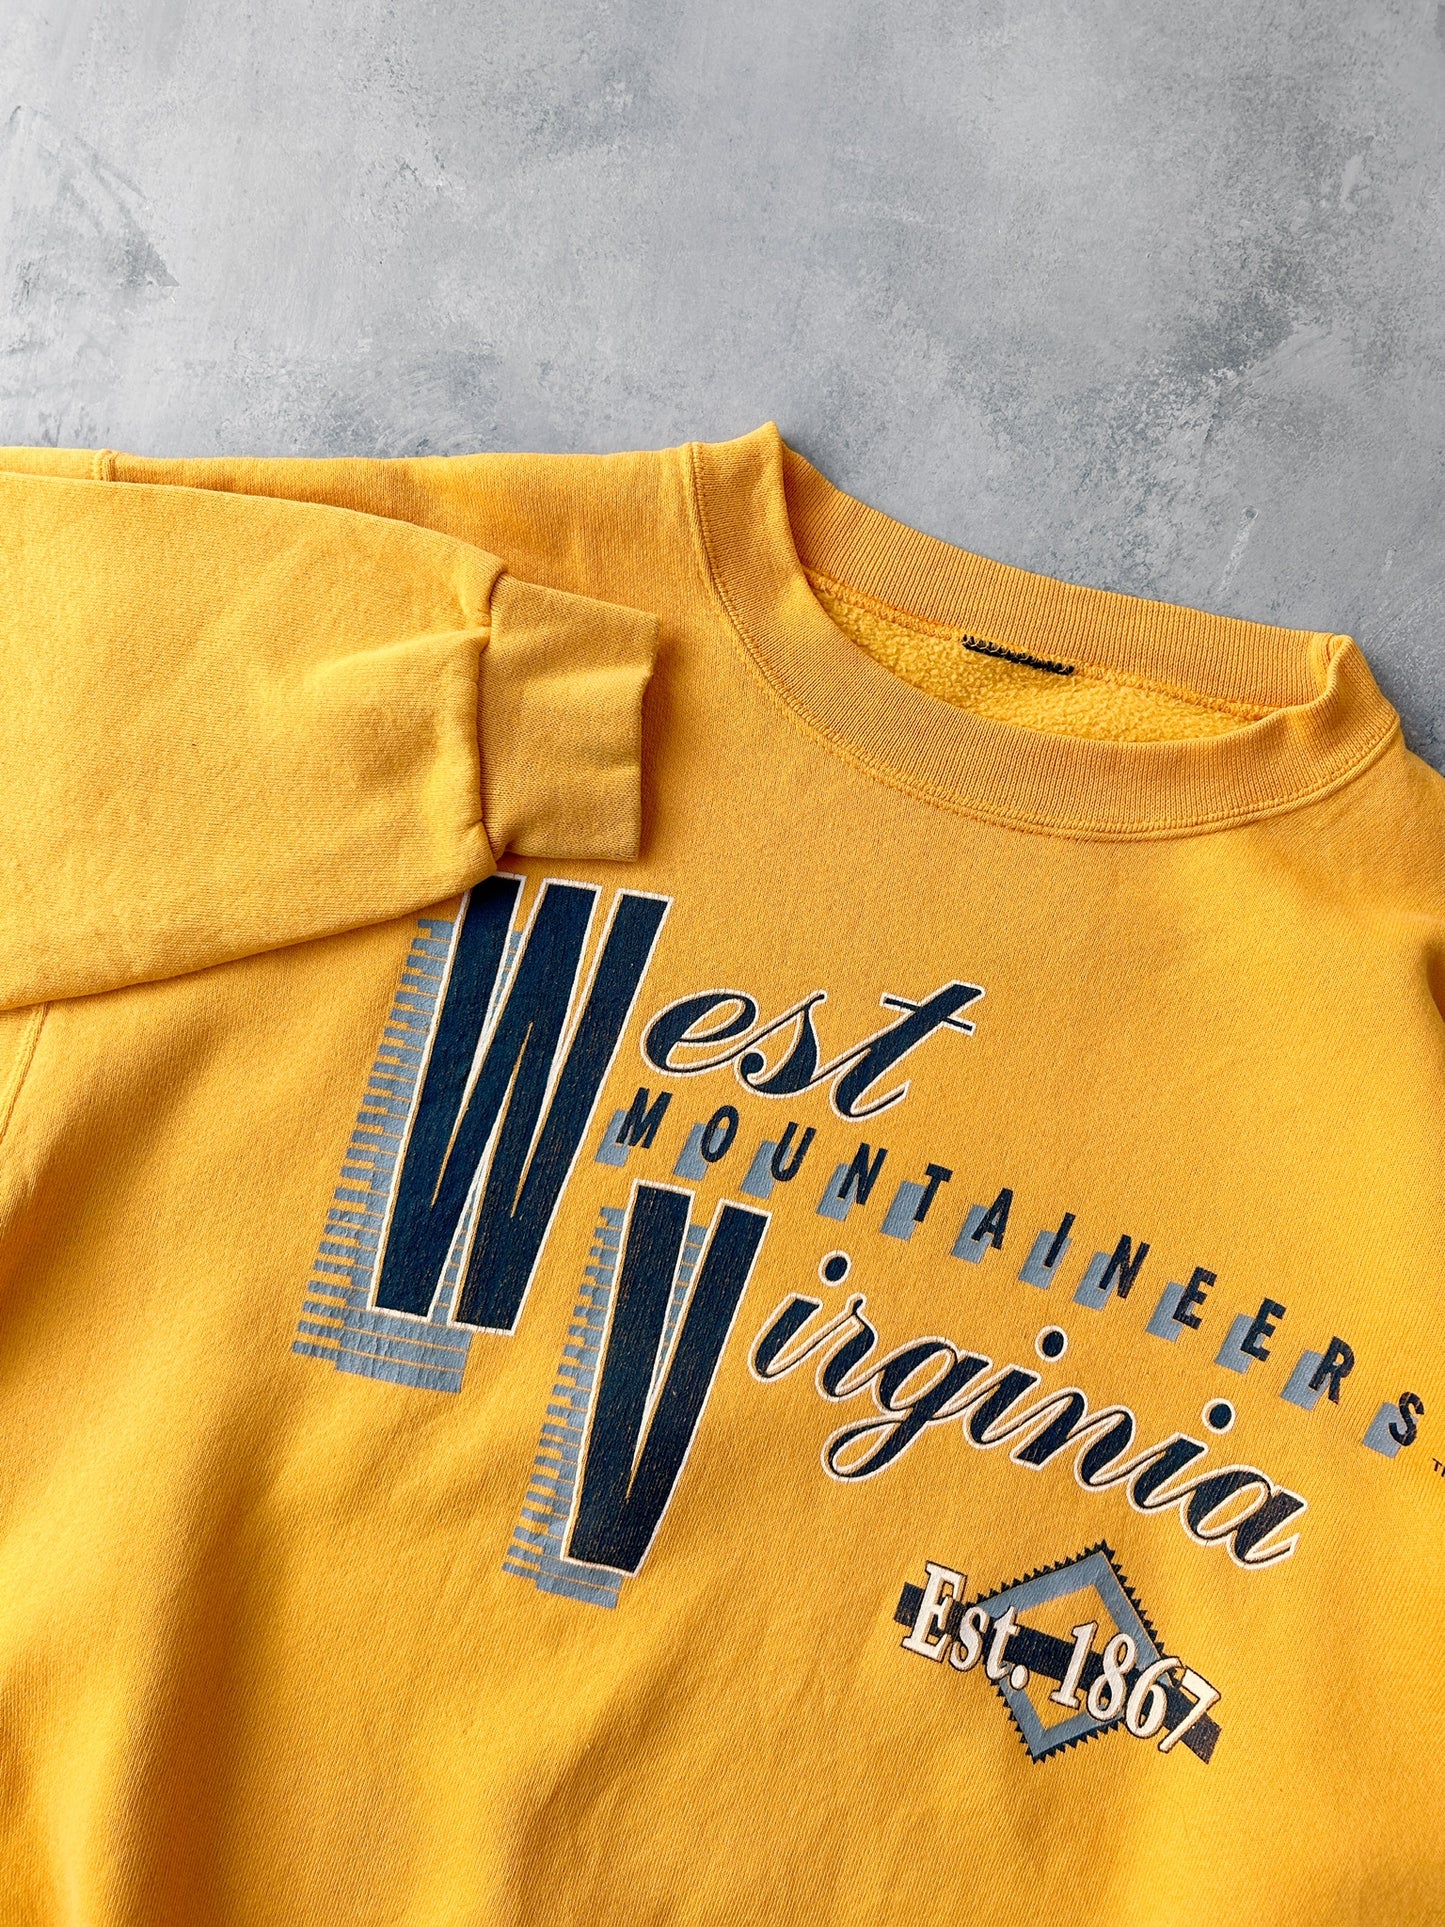 West Virginia University Sweatshirt 90's - Large / XL